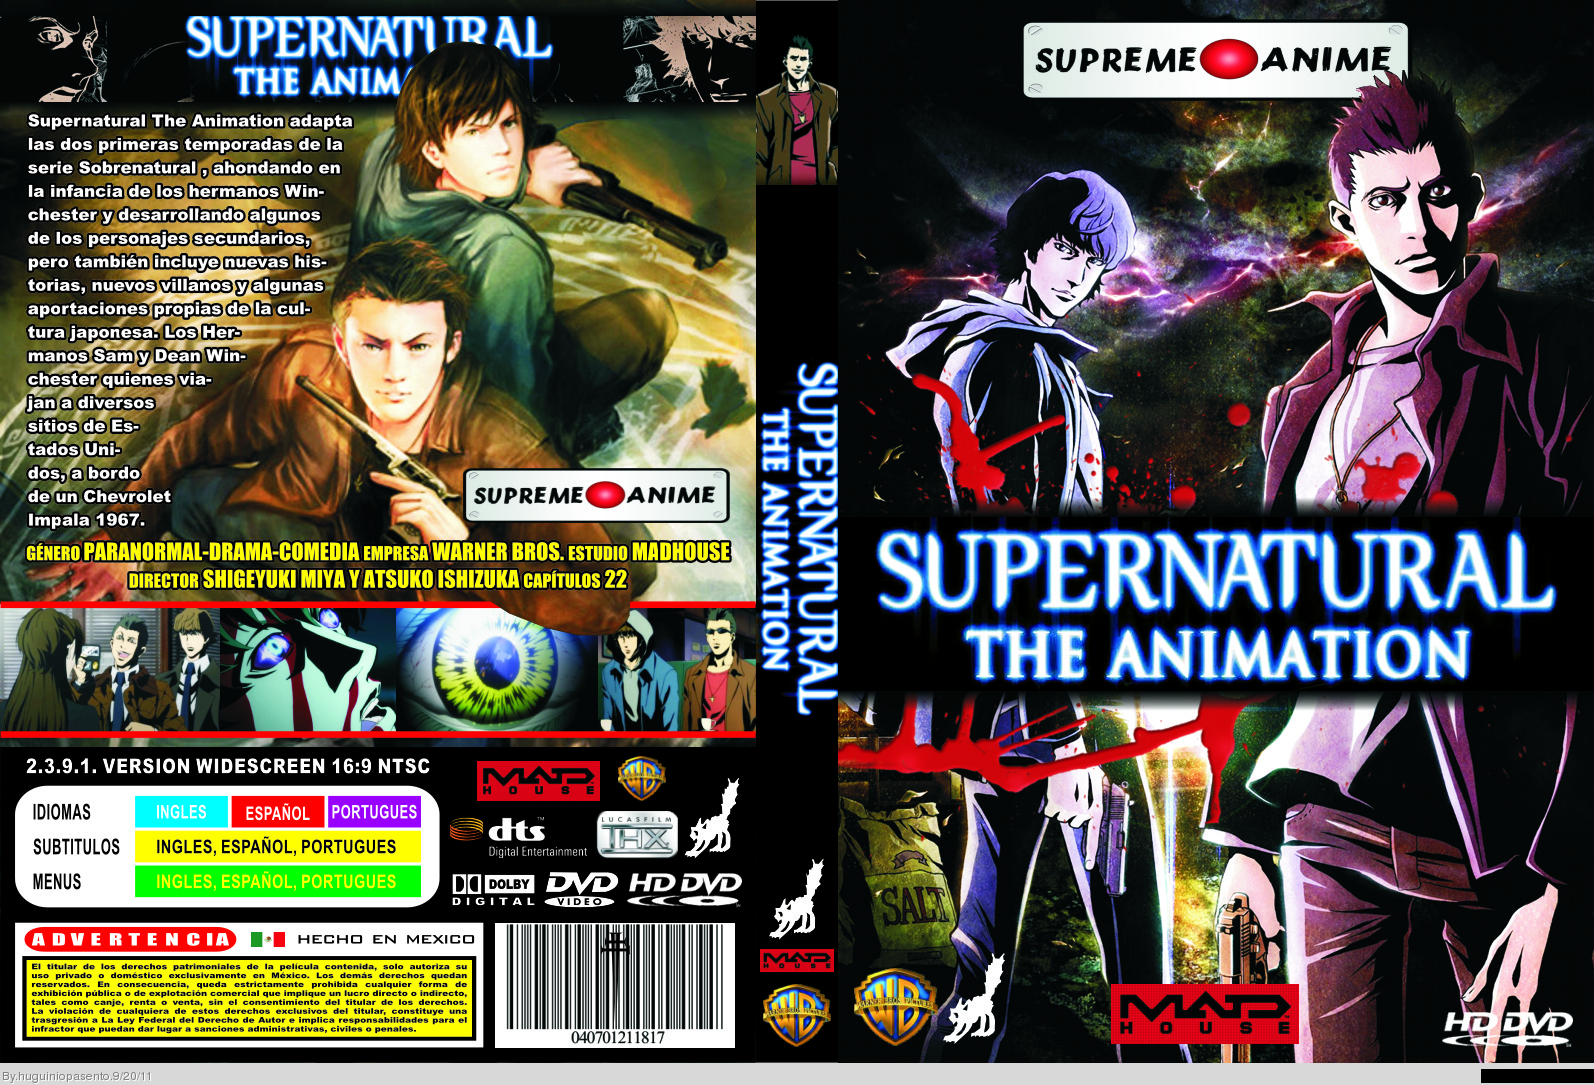 Supernatural - Season 1 box cover